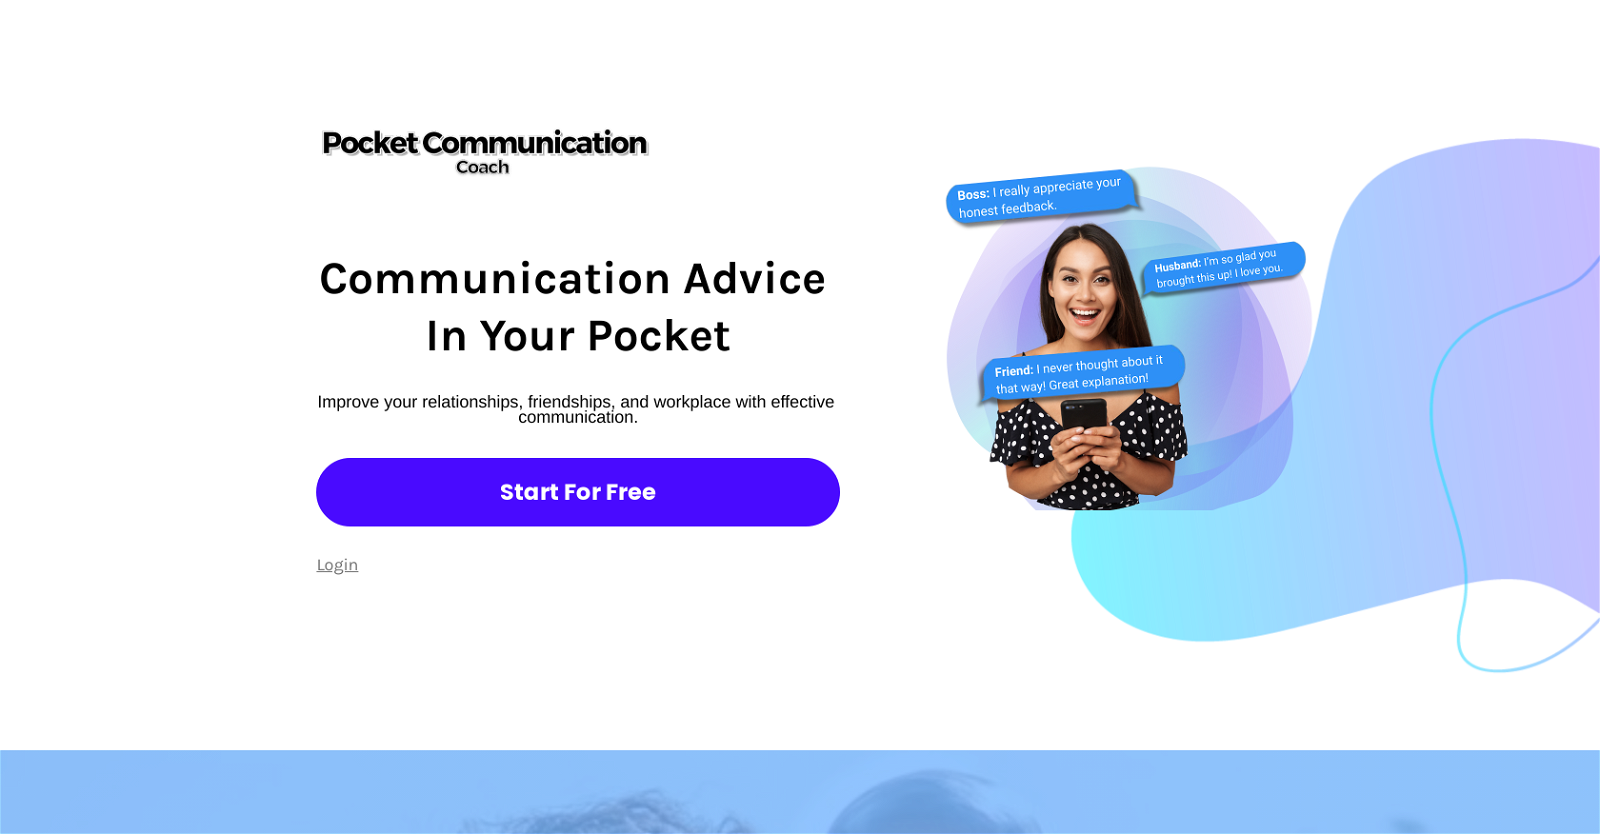 Pocket Communication Coach website